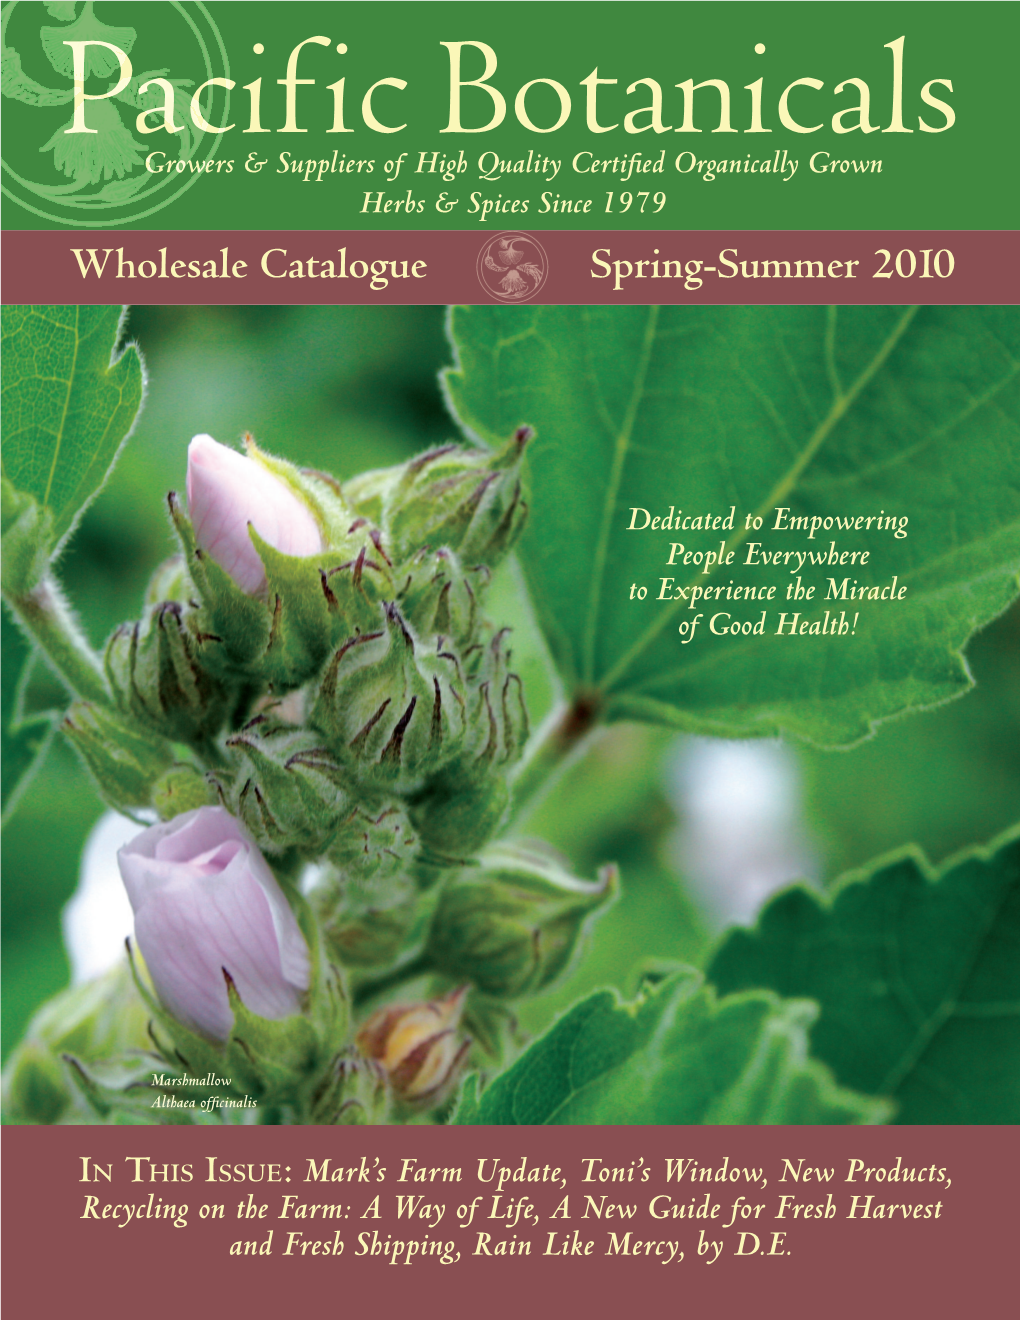 Wholesale Catalogue Spring-Summer 2010